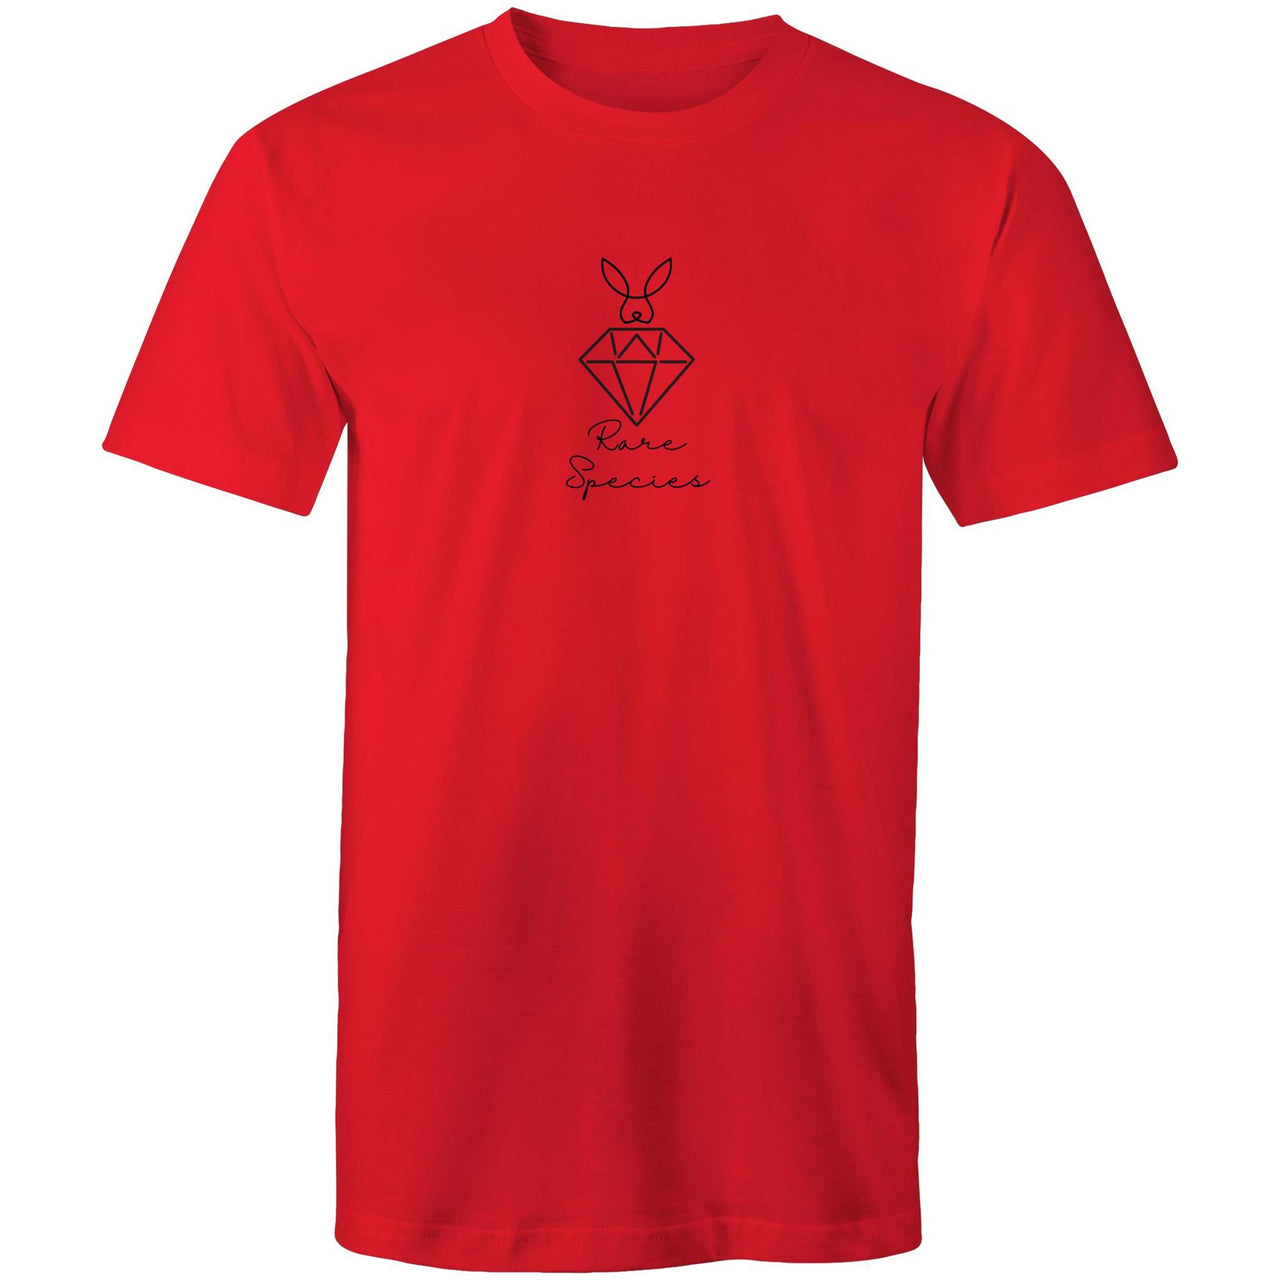 CBF Rare Species Crew T-Shirt red by CBF Clothing